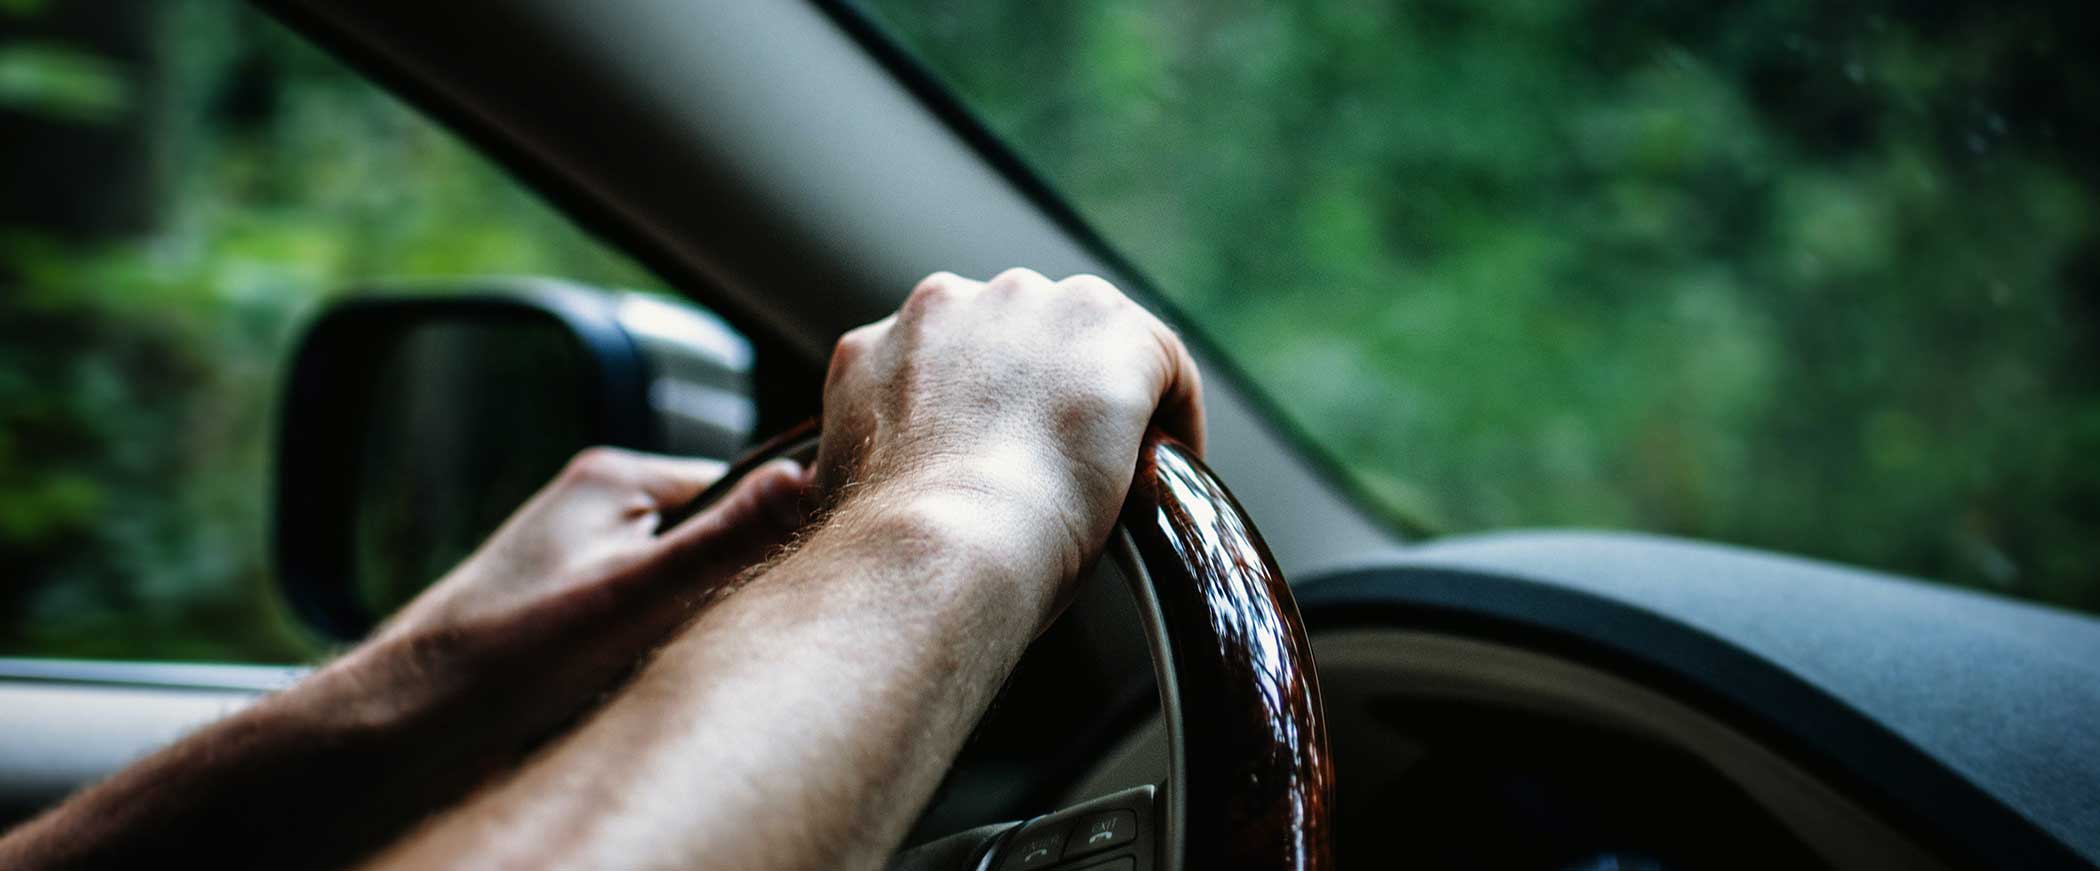 hands gripping car steering wheel